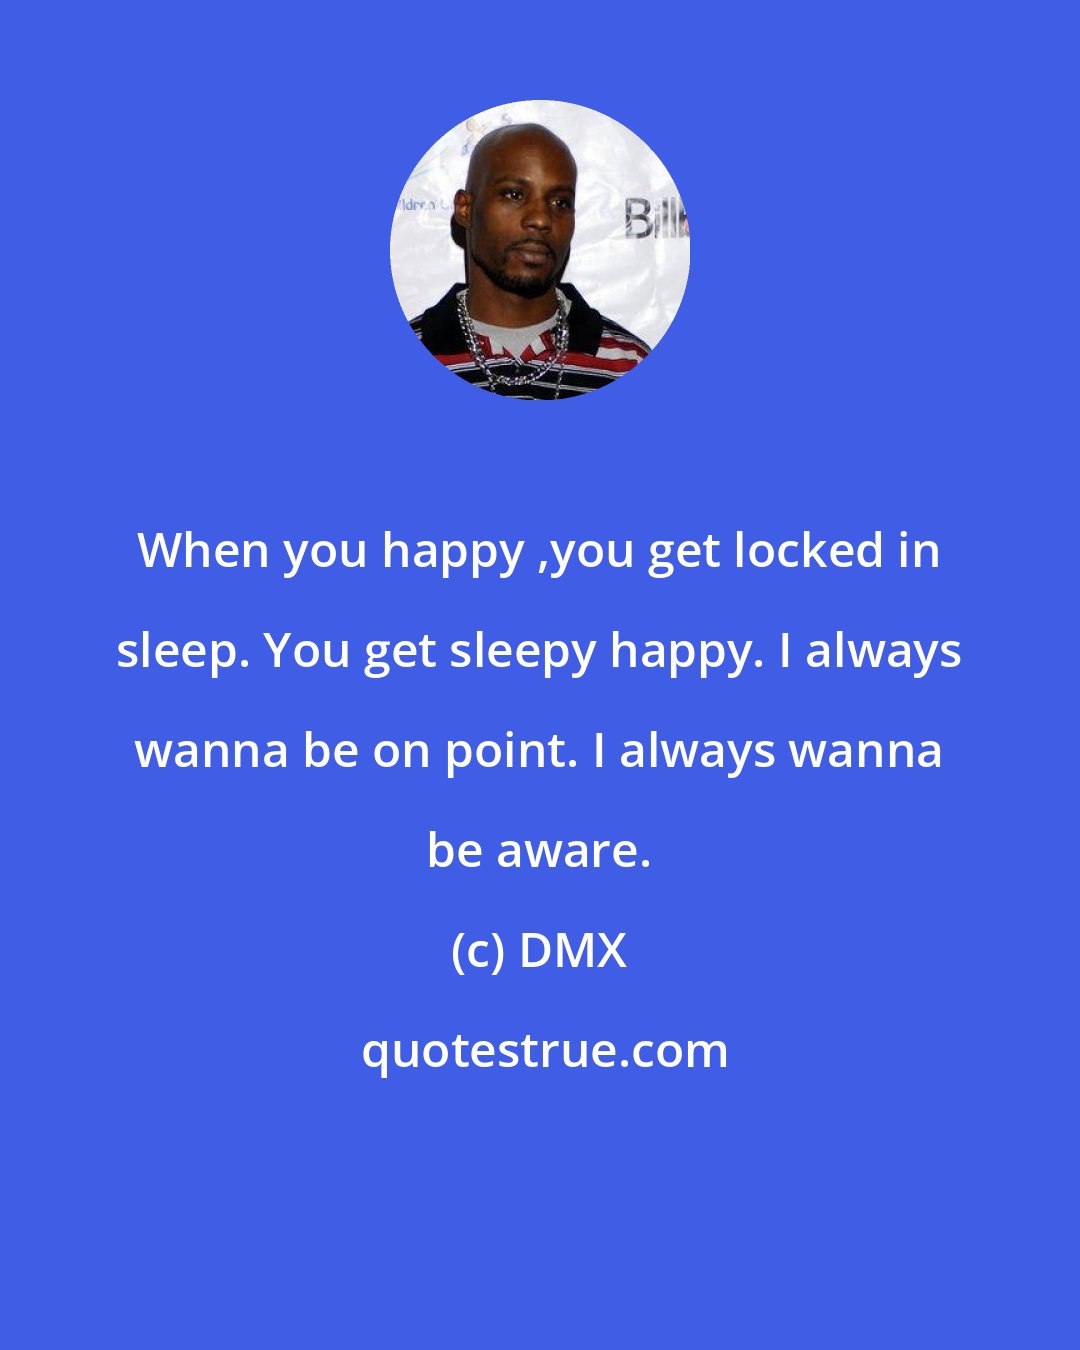 DMX: When you happy ,you get locked in sleep. You get sleepy happy. I always wanna be on point. I always wanna be aware.